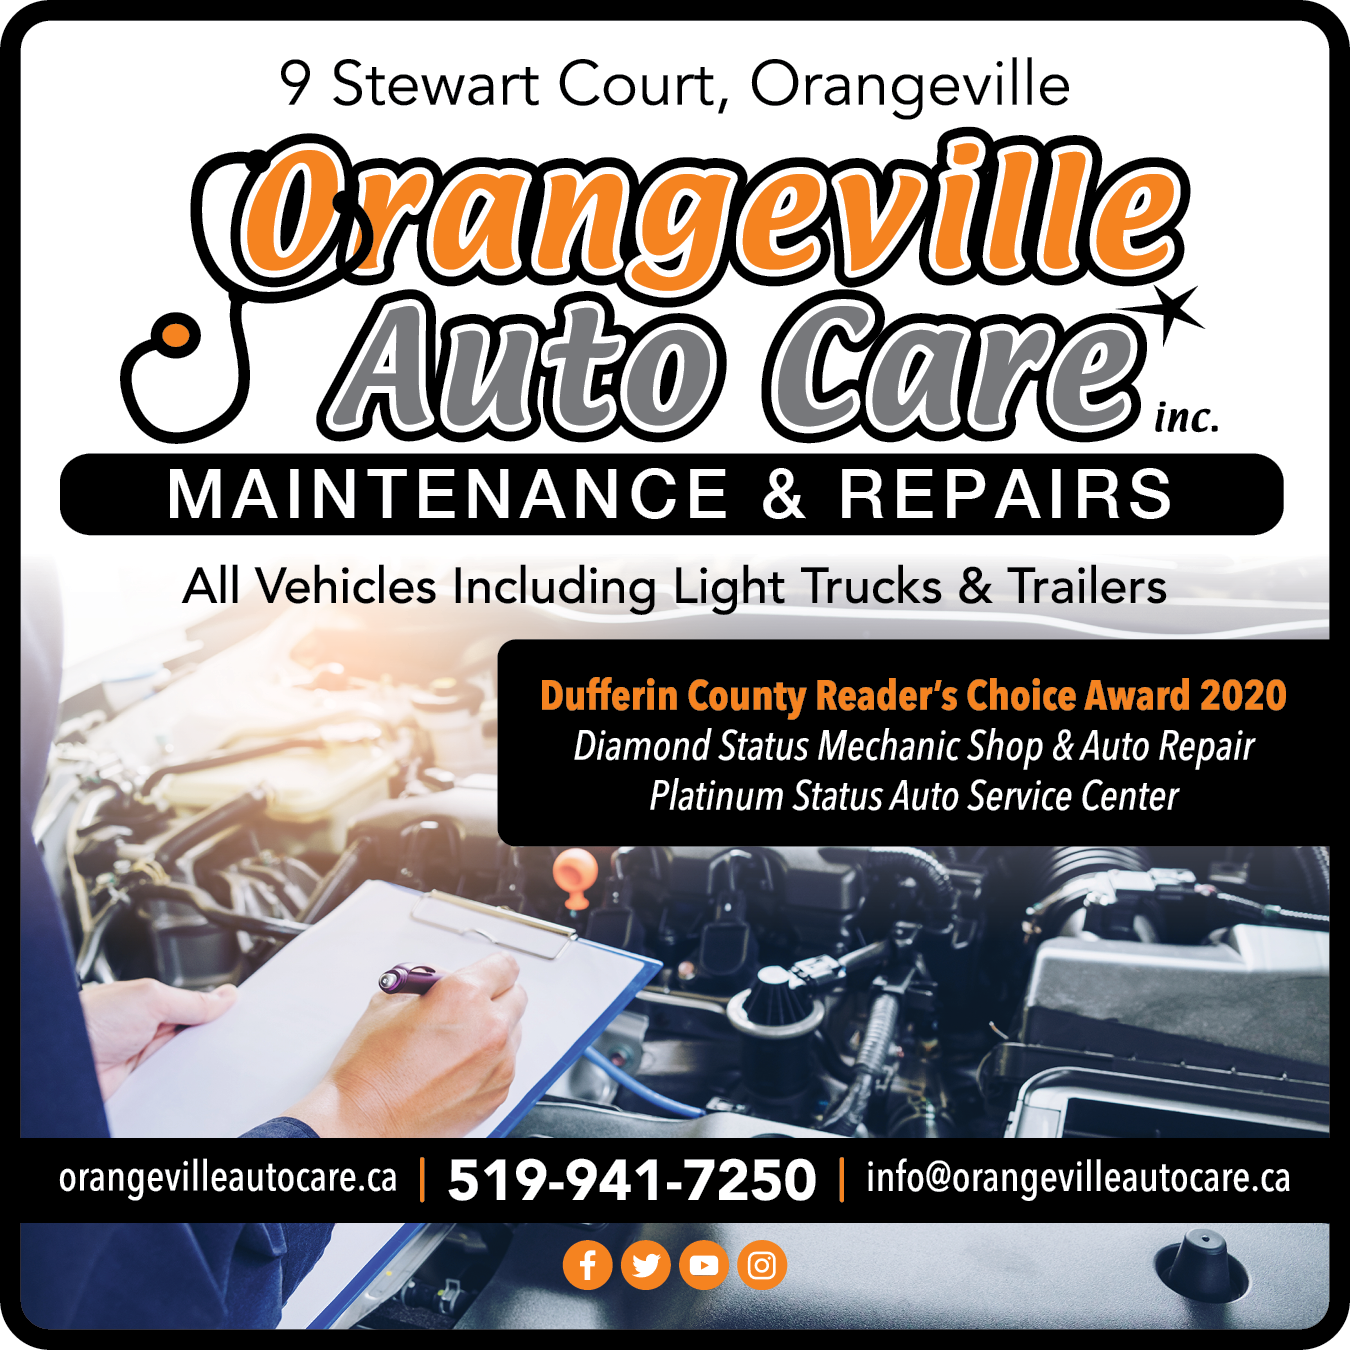 Orangeville Auto Care Inc